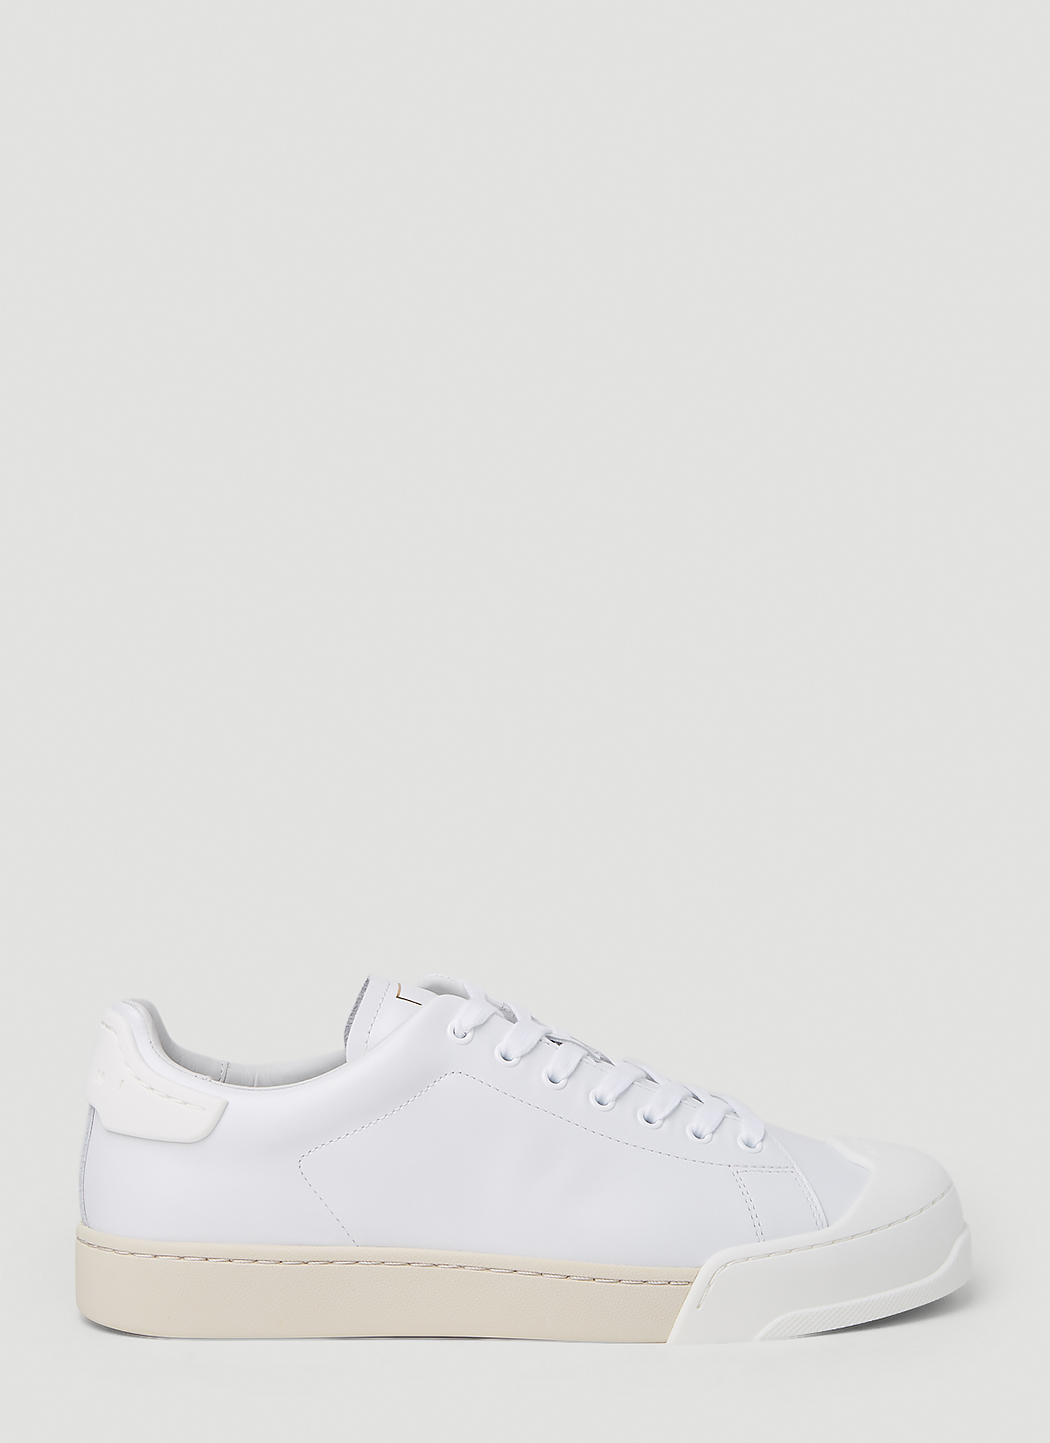 LN-CC® Dada | Sneakers in Bumper Marni White